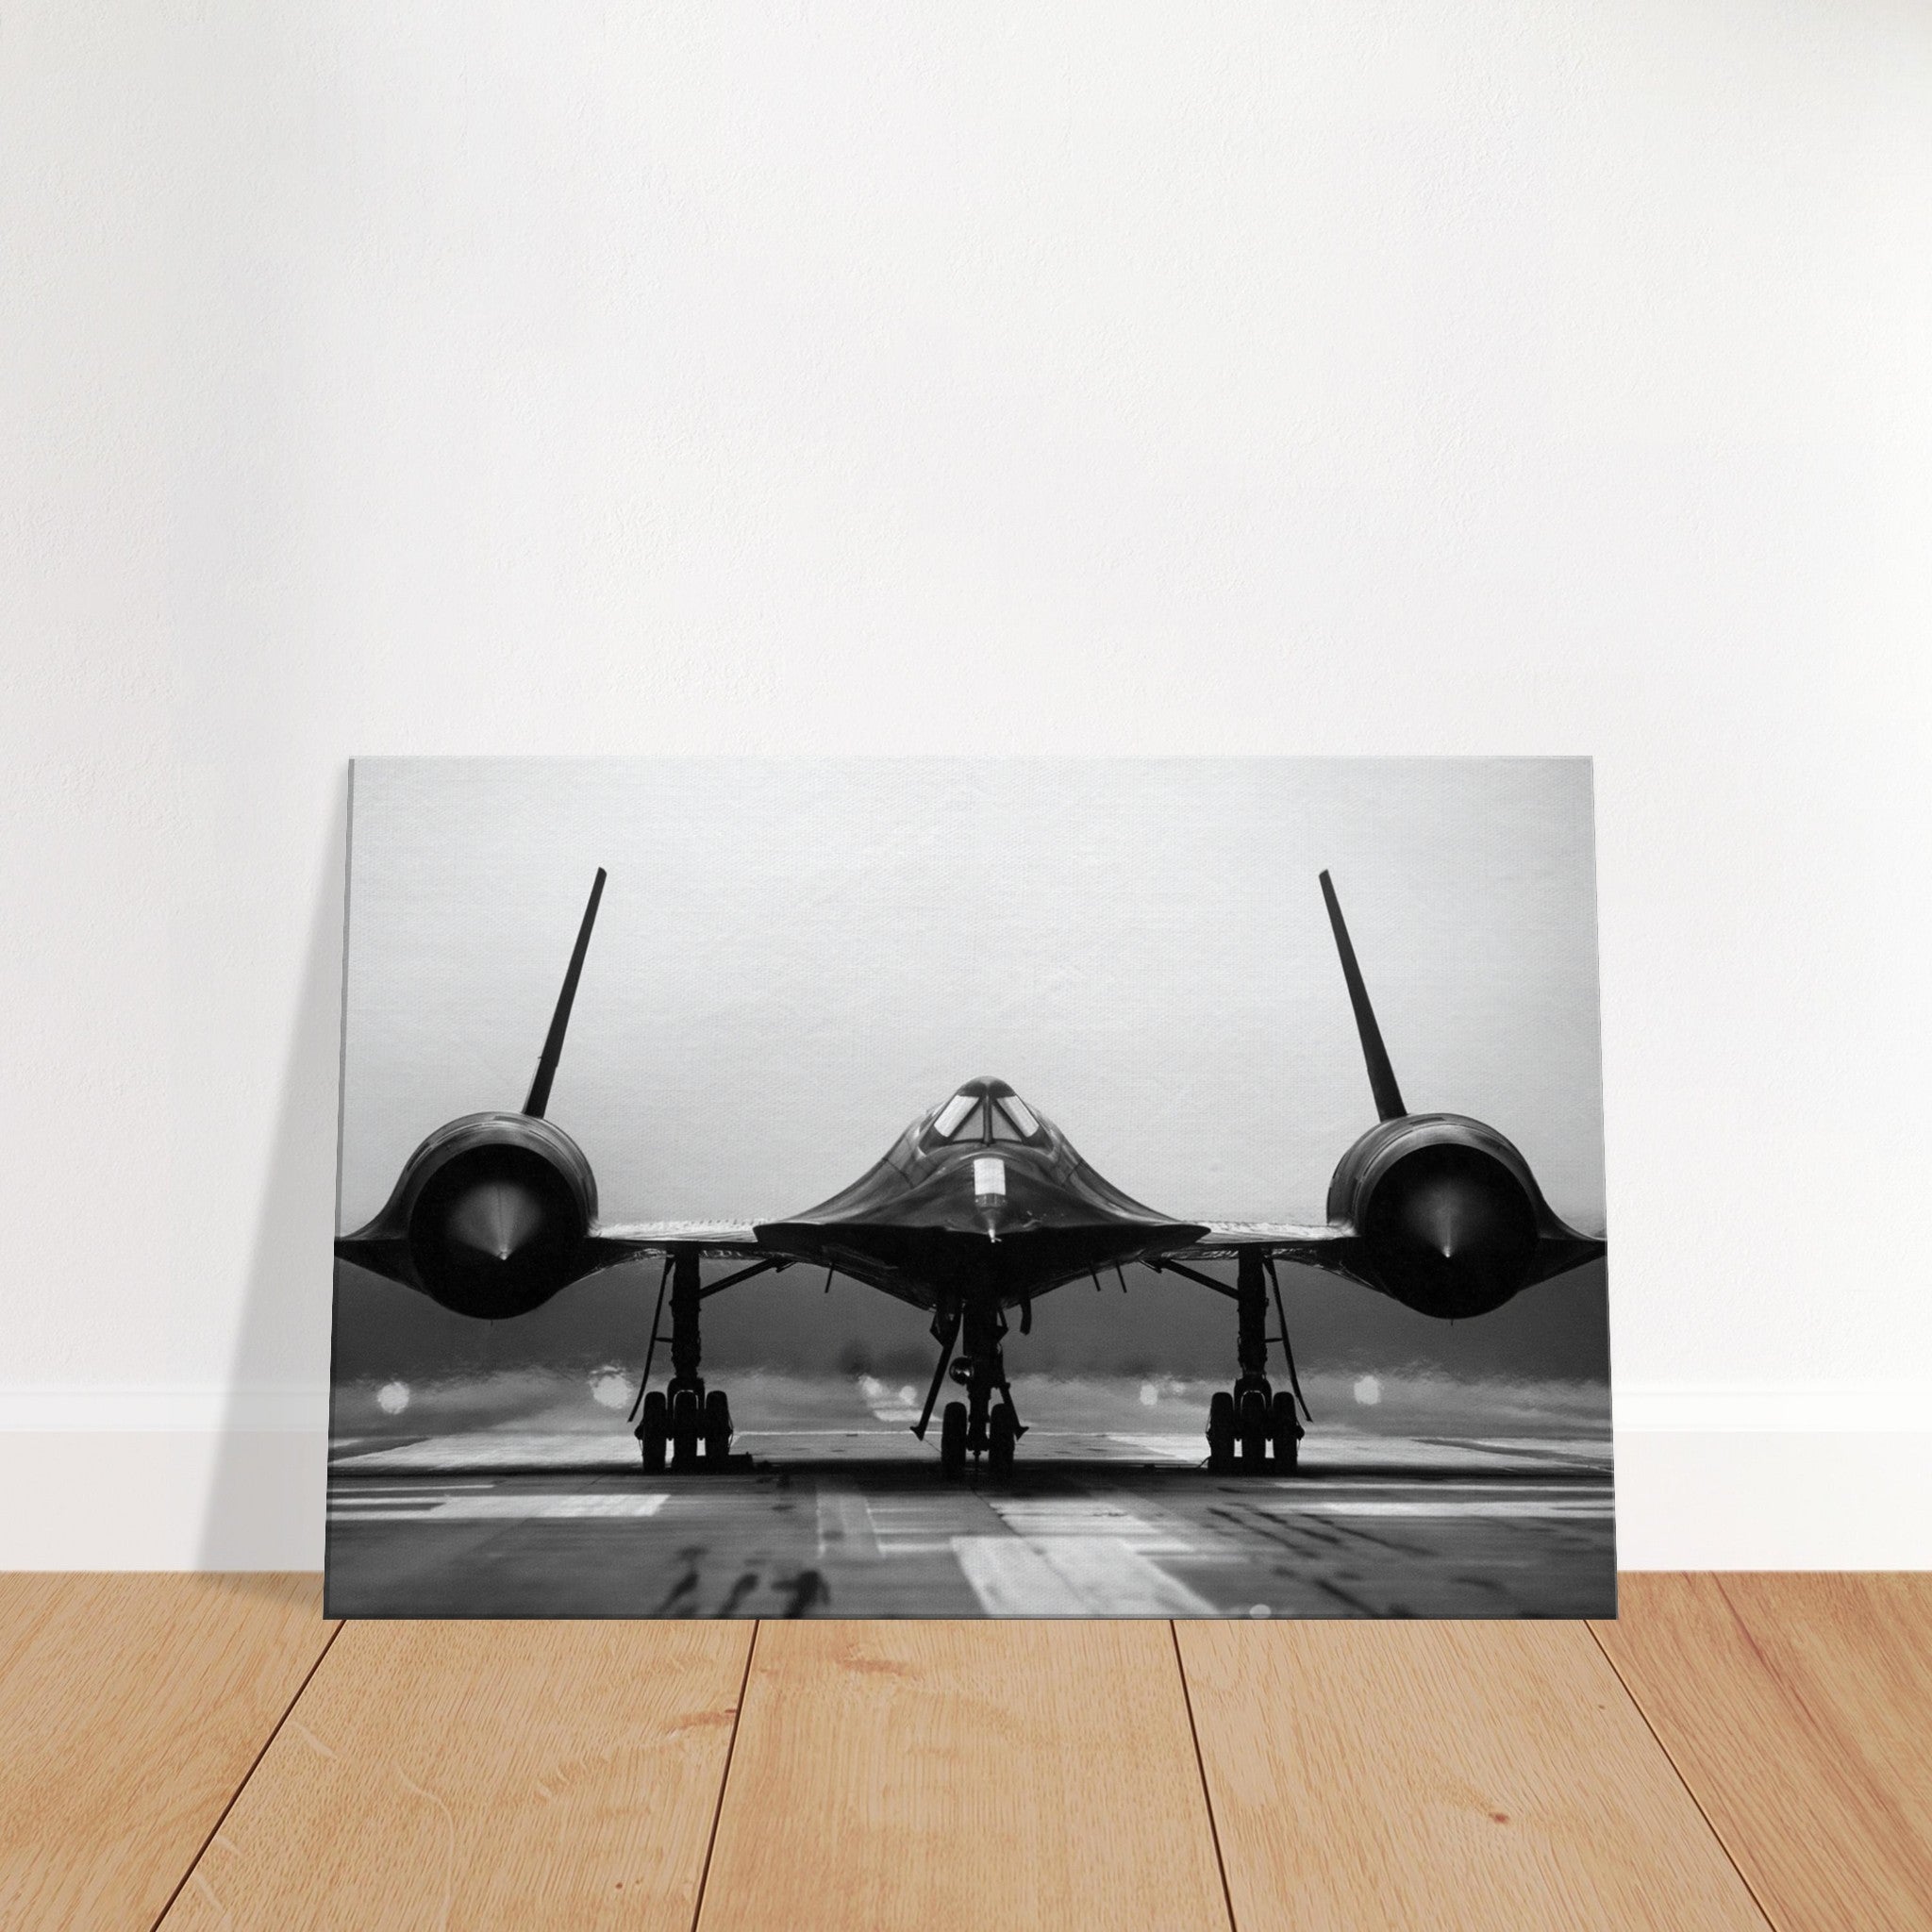 SR-71 "Blackbird" Front View on Canvas - I Love a Hangar